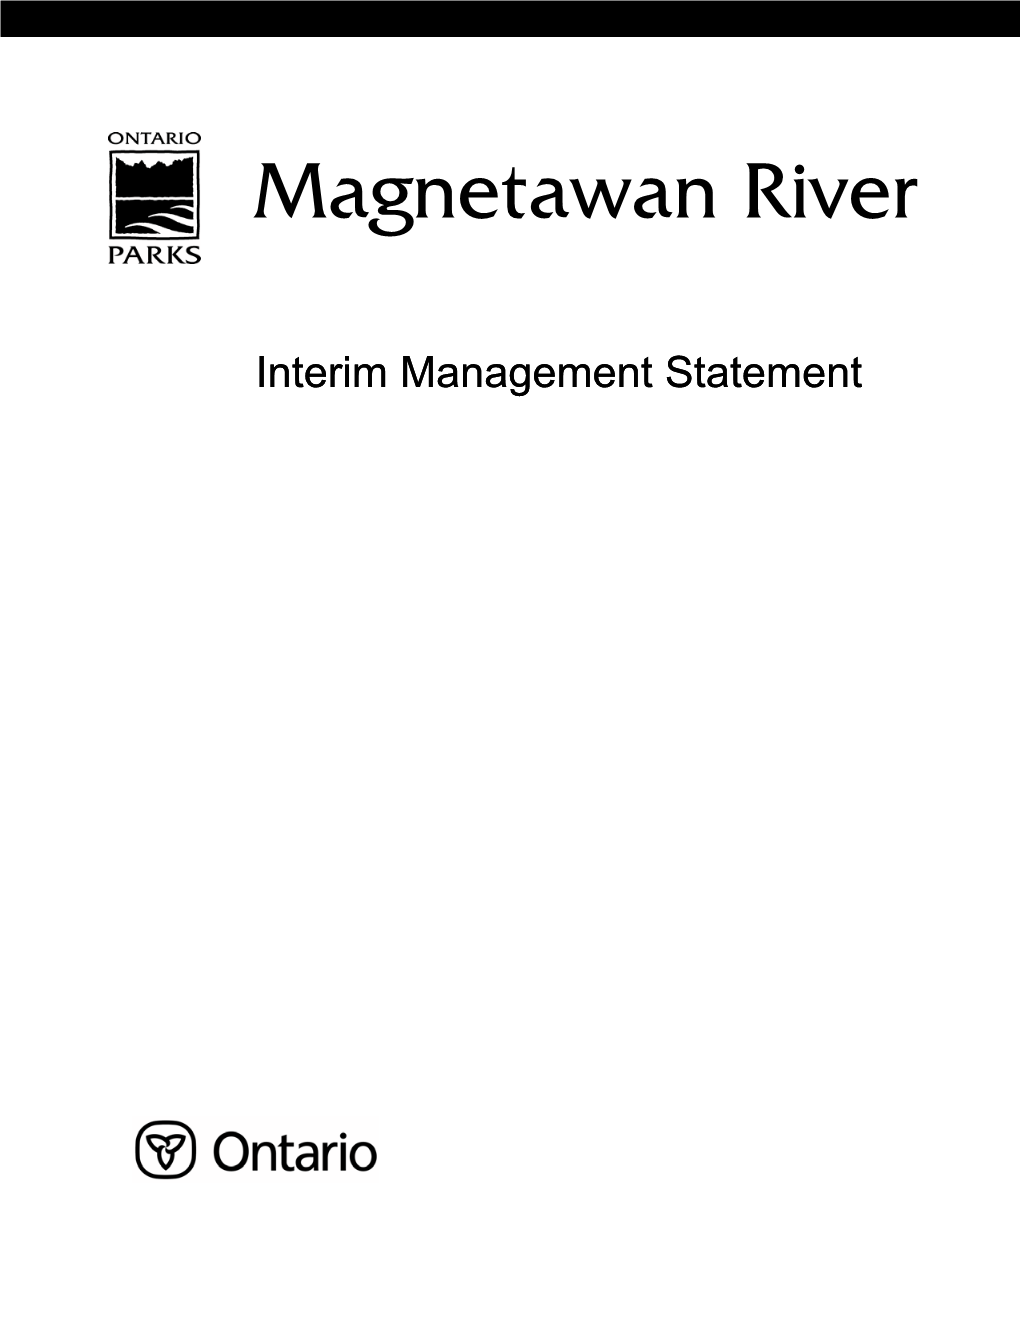 Magnetawan River